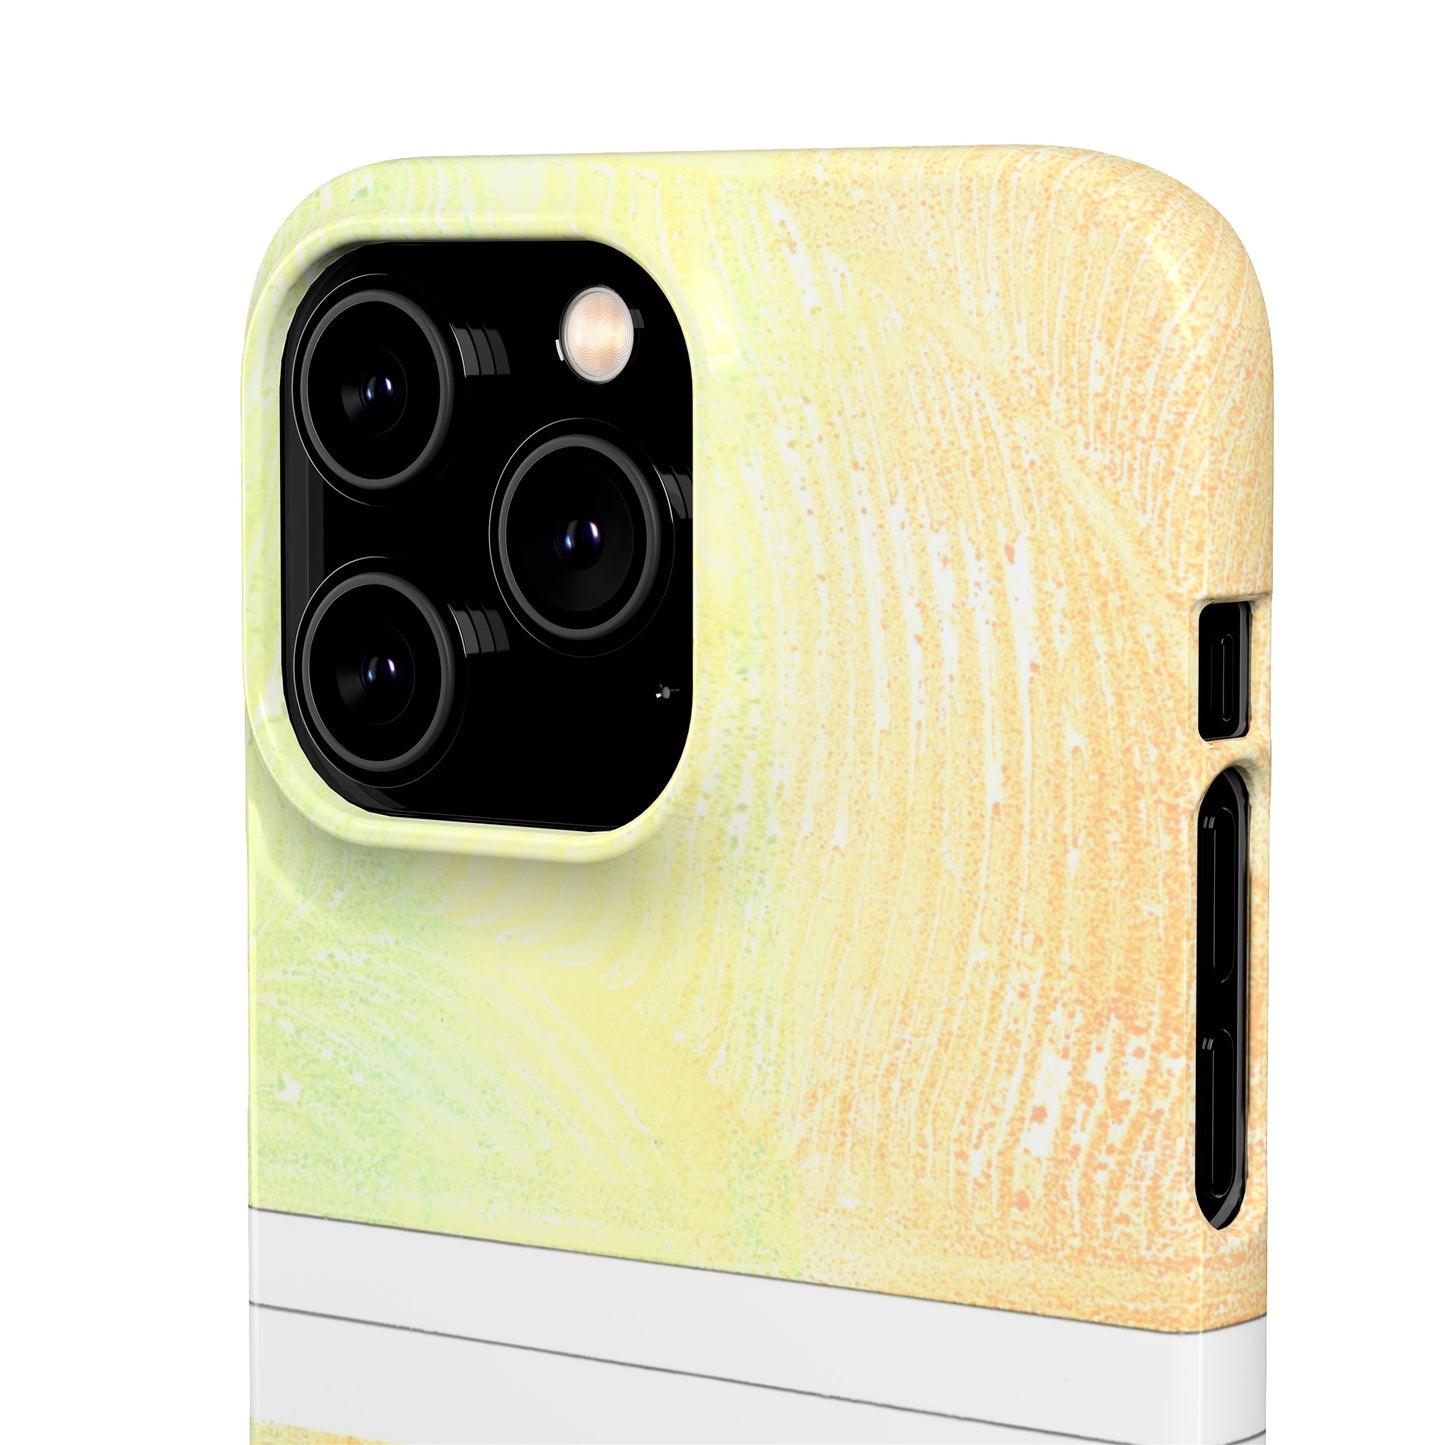 iPhone Samsung Galaxy Pixel5G Snap Case Phone Case Piña Colada with Tropical Waves